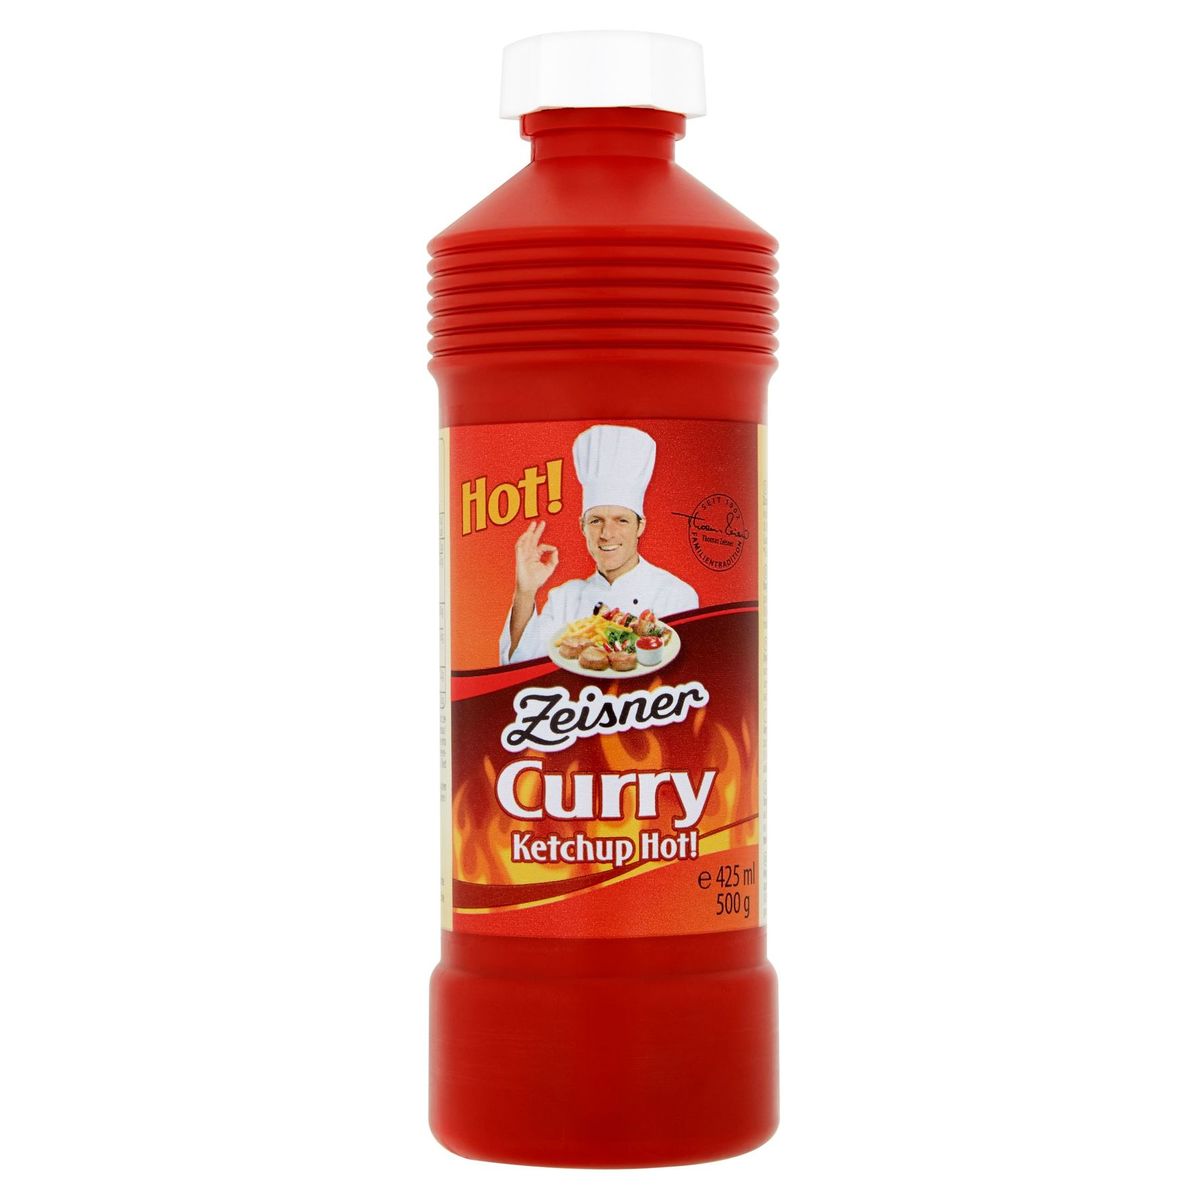 Zeisner Curry Ketchup Hot! 425 ml